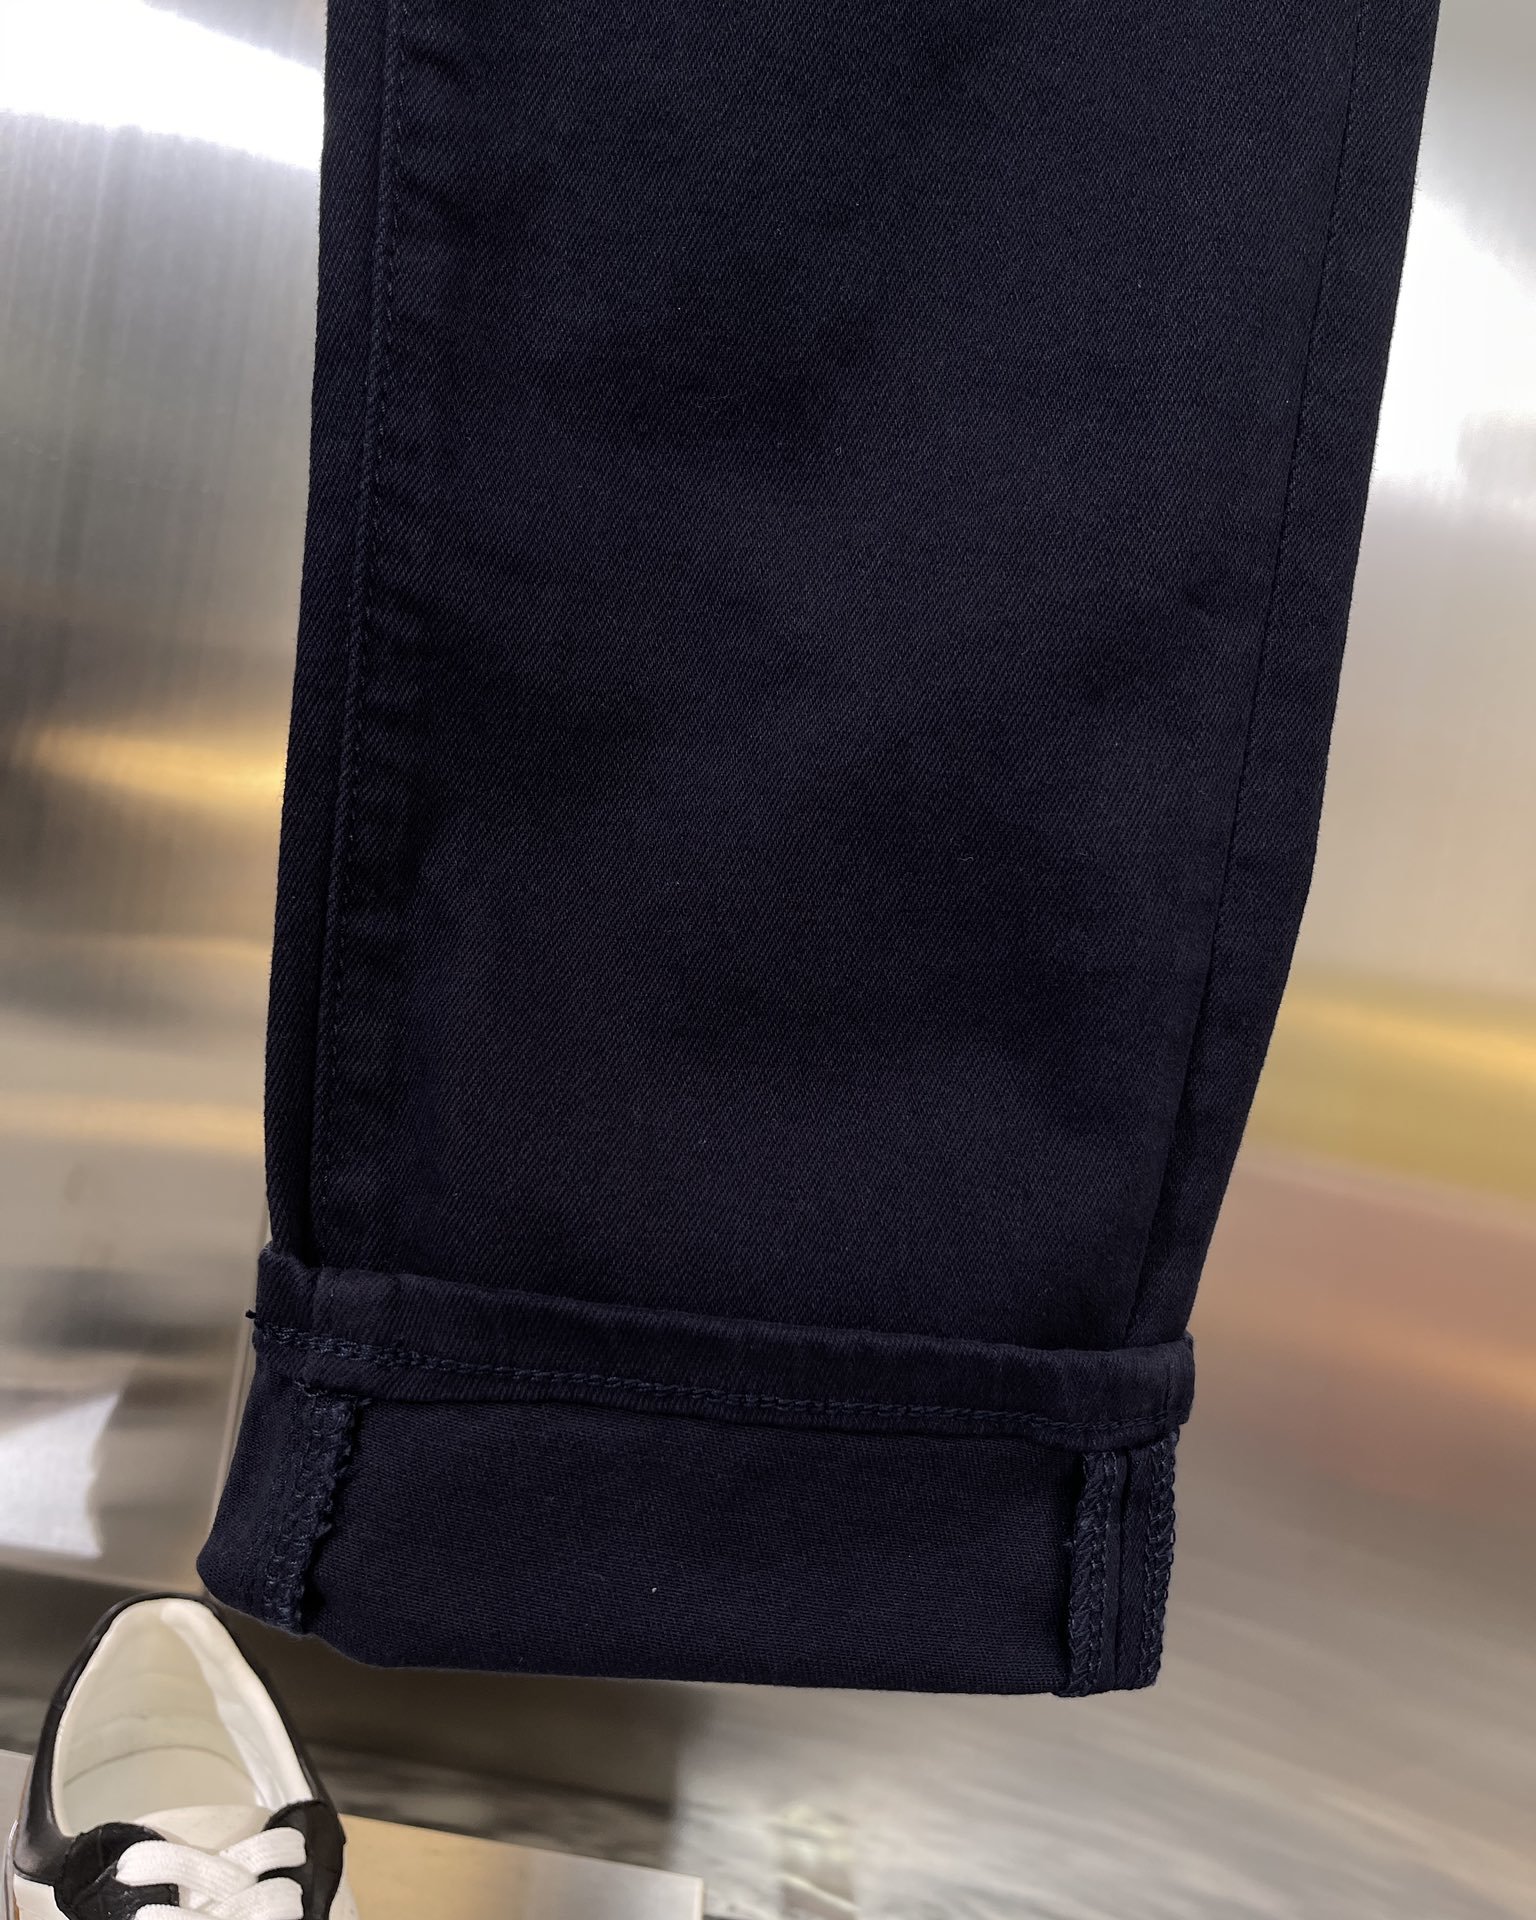 Zegna杰尼亚款式男款牛仔裤mensjeanssize29-38have35NO37立体裁剪好版型手感